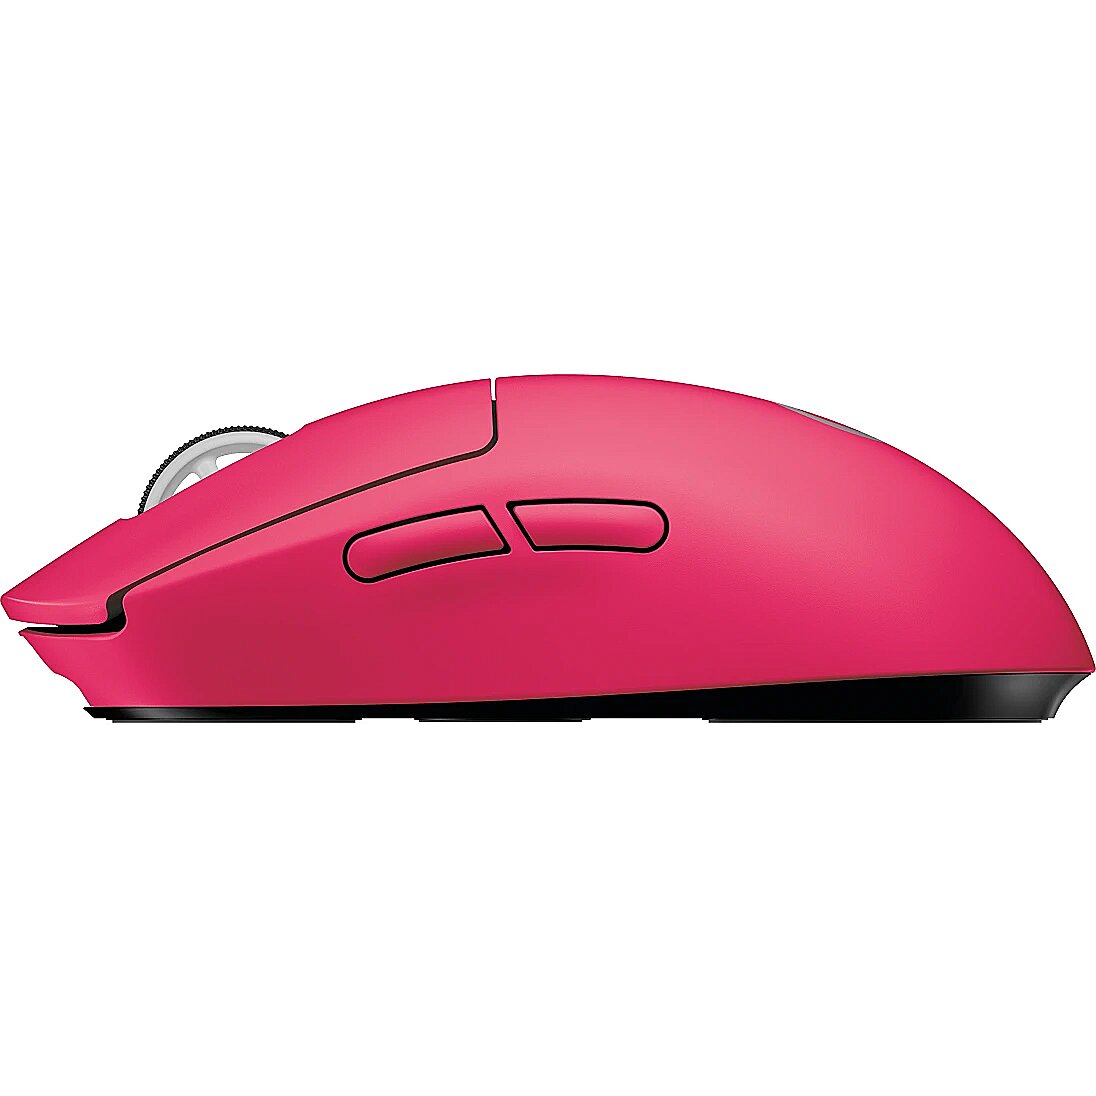 Игровая мышь superlight. Мышка Logitech g Pro x Superlight. Мышка Logitech g Pro x Superlight Pink. Logitech g Pro x Superlight Wireless Mouse Pink. Мышь беспроводная Logitech Pro x Superlight розовый.